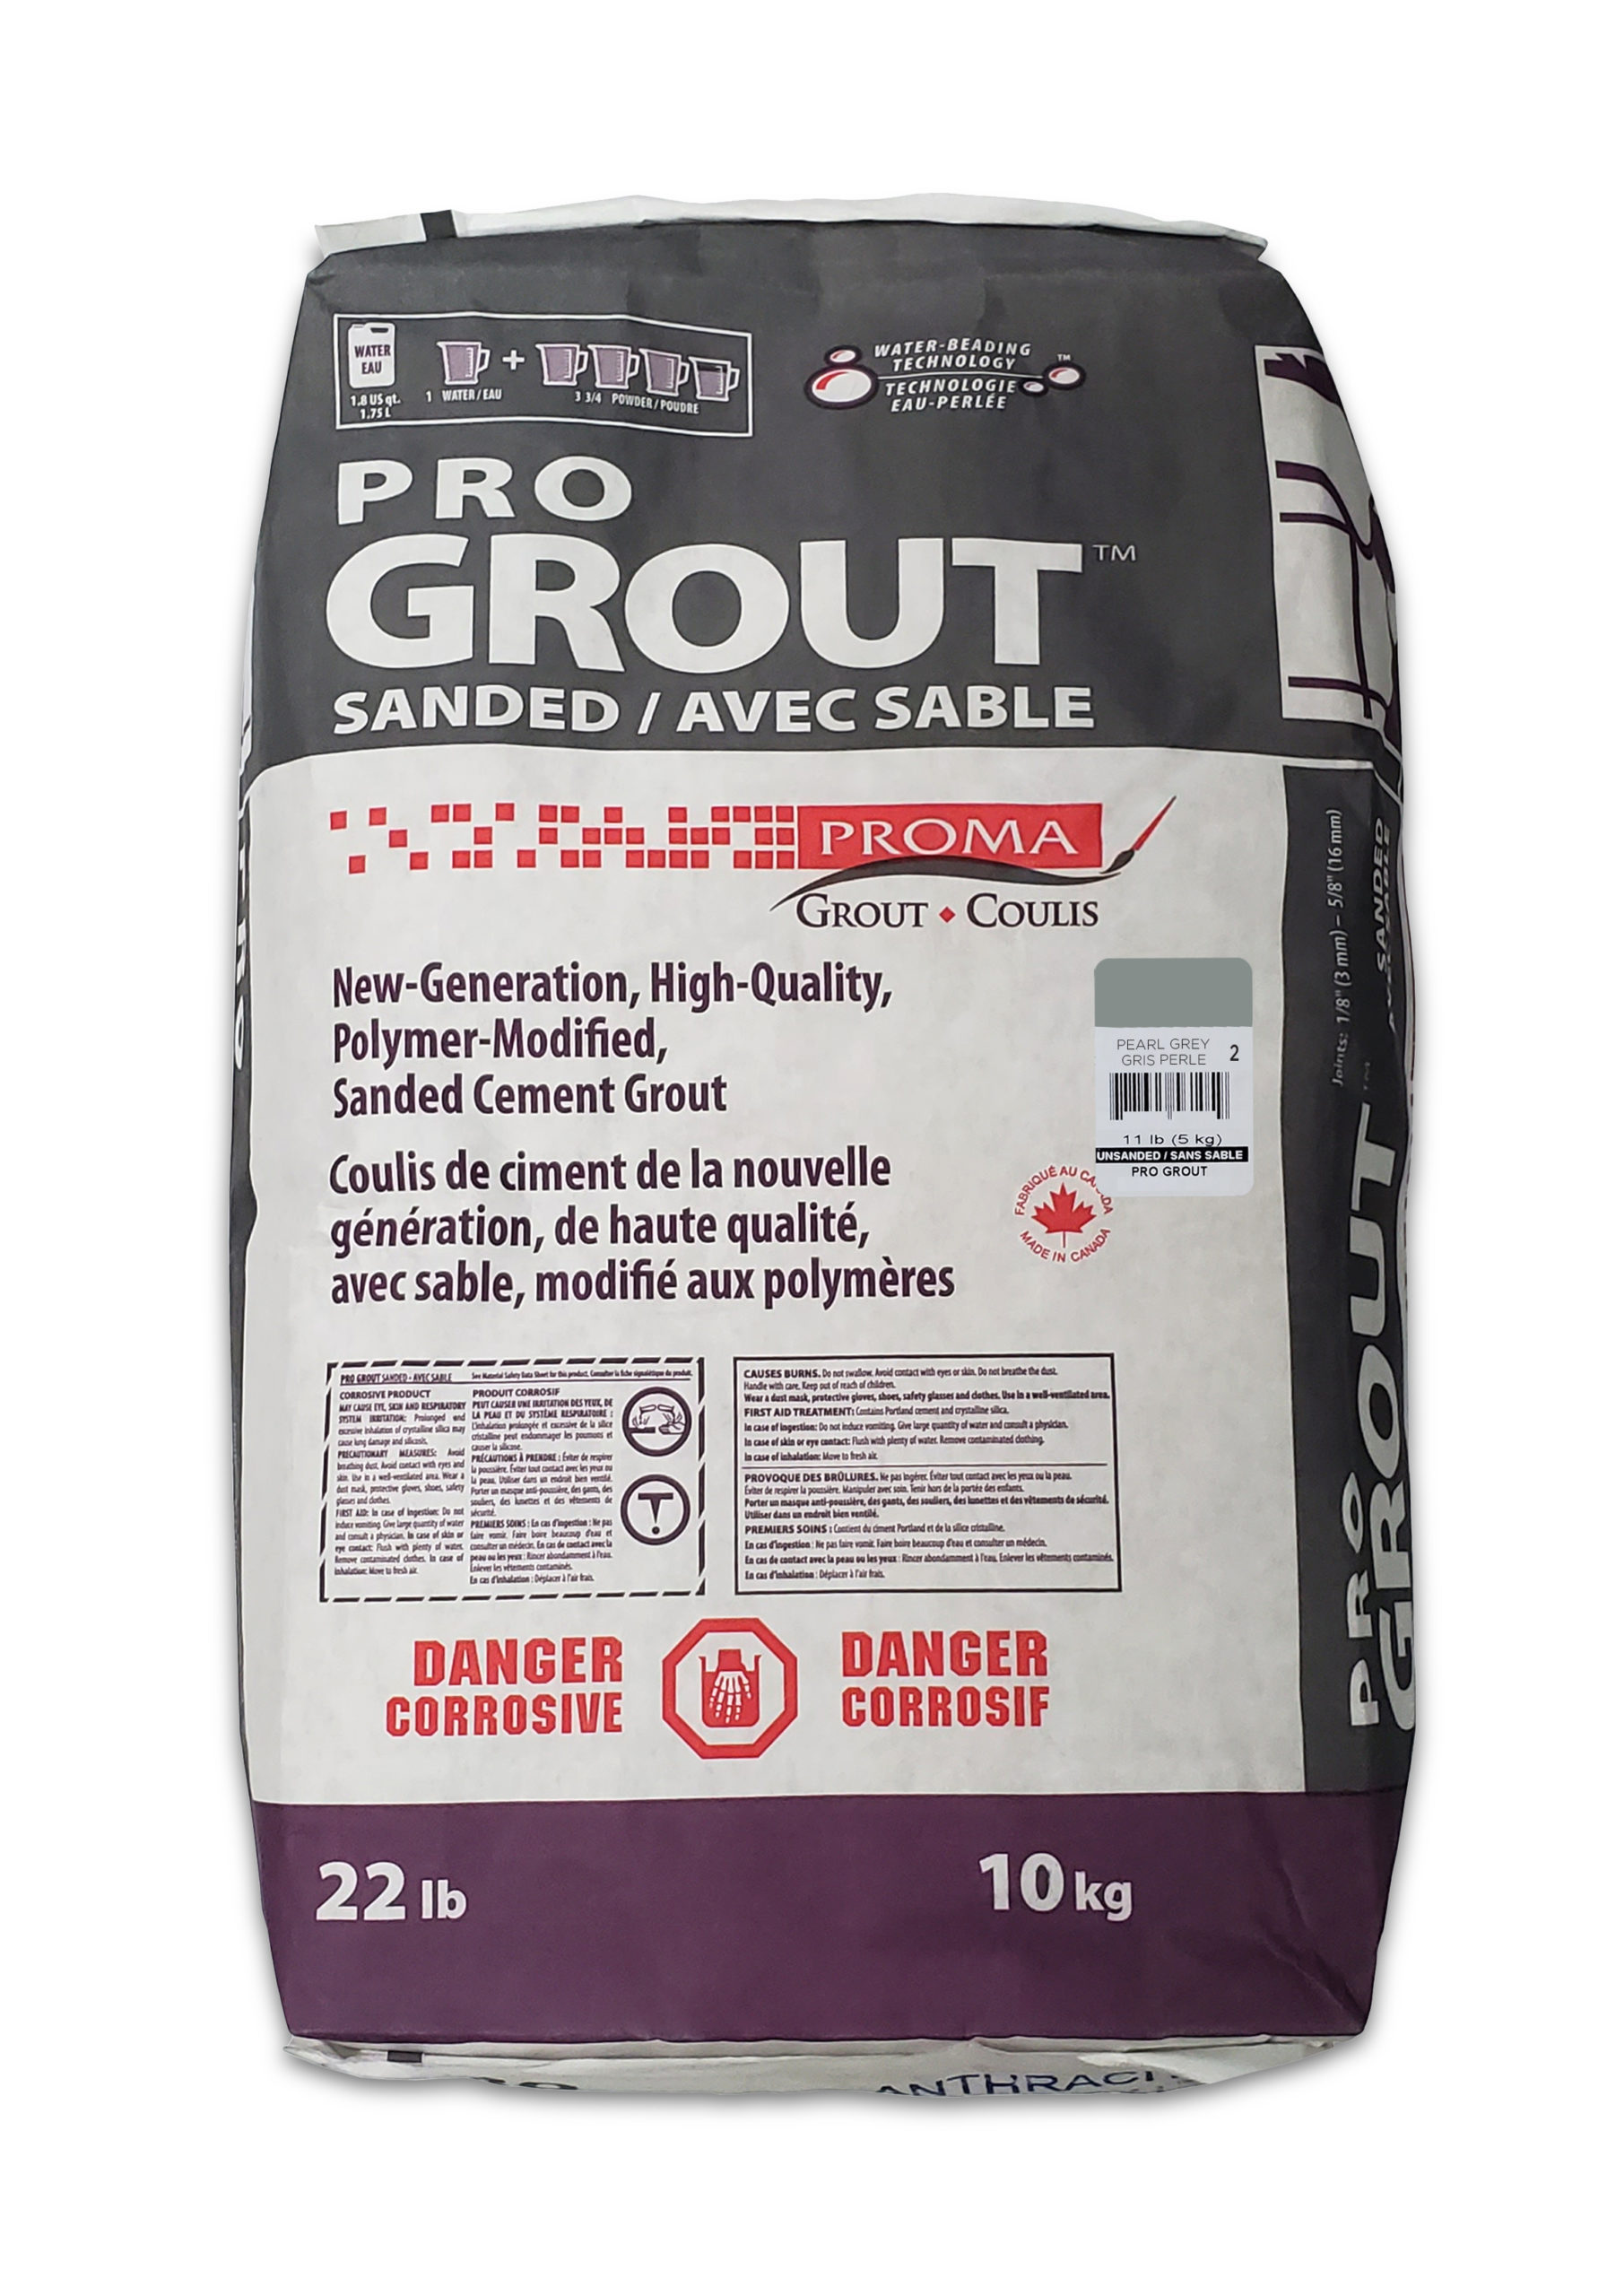 Pro Grout – Sanded_Pearl Grey_10kg_22lb